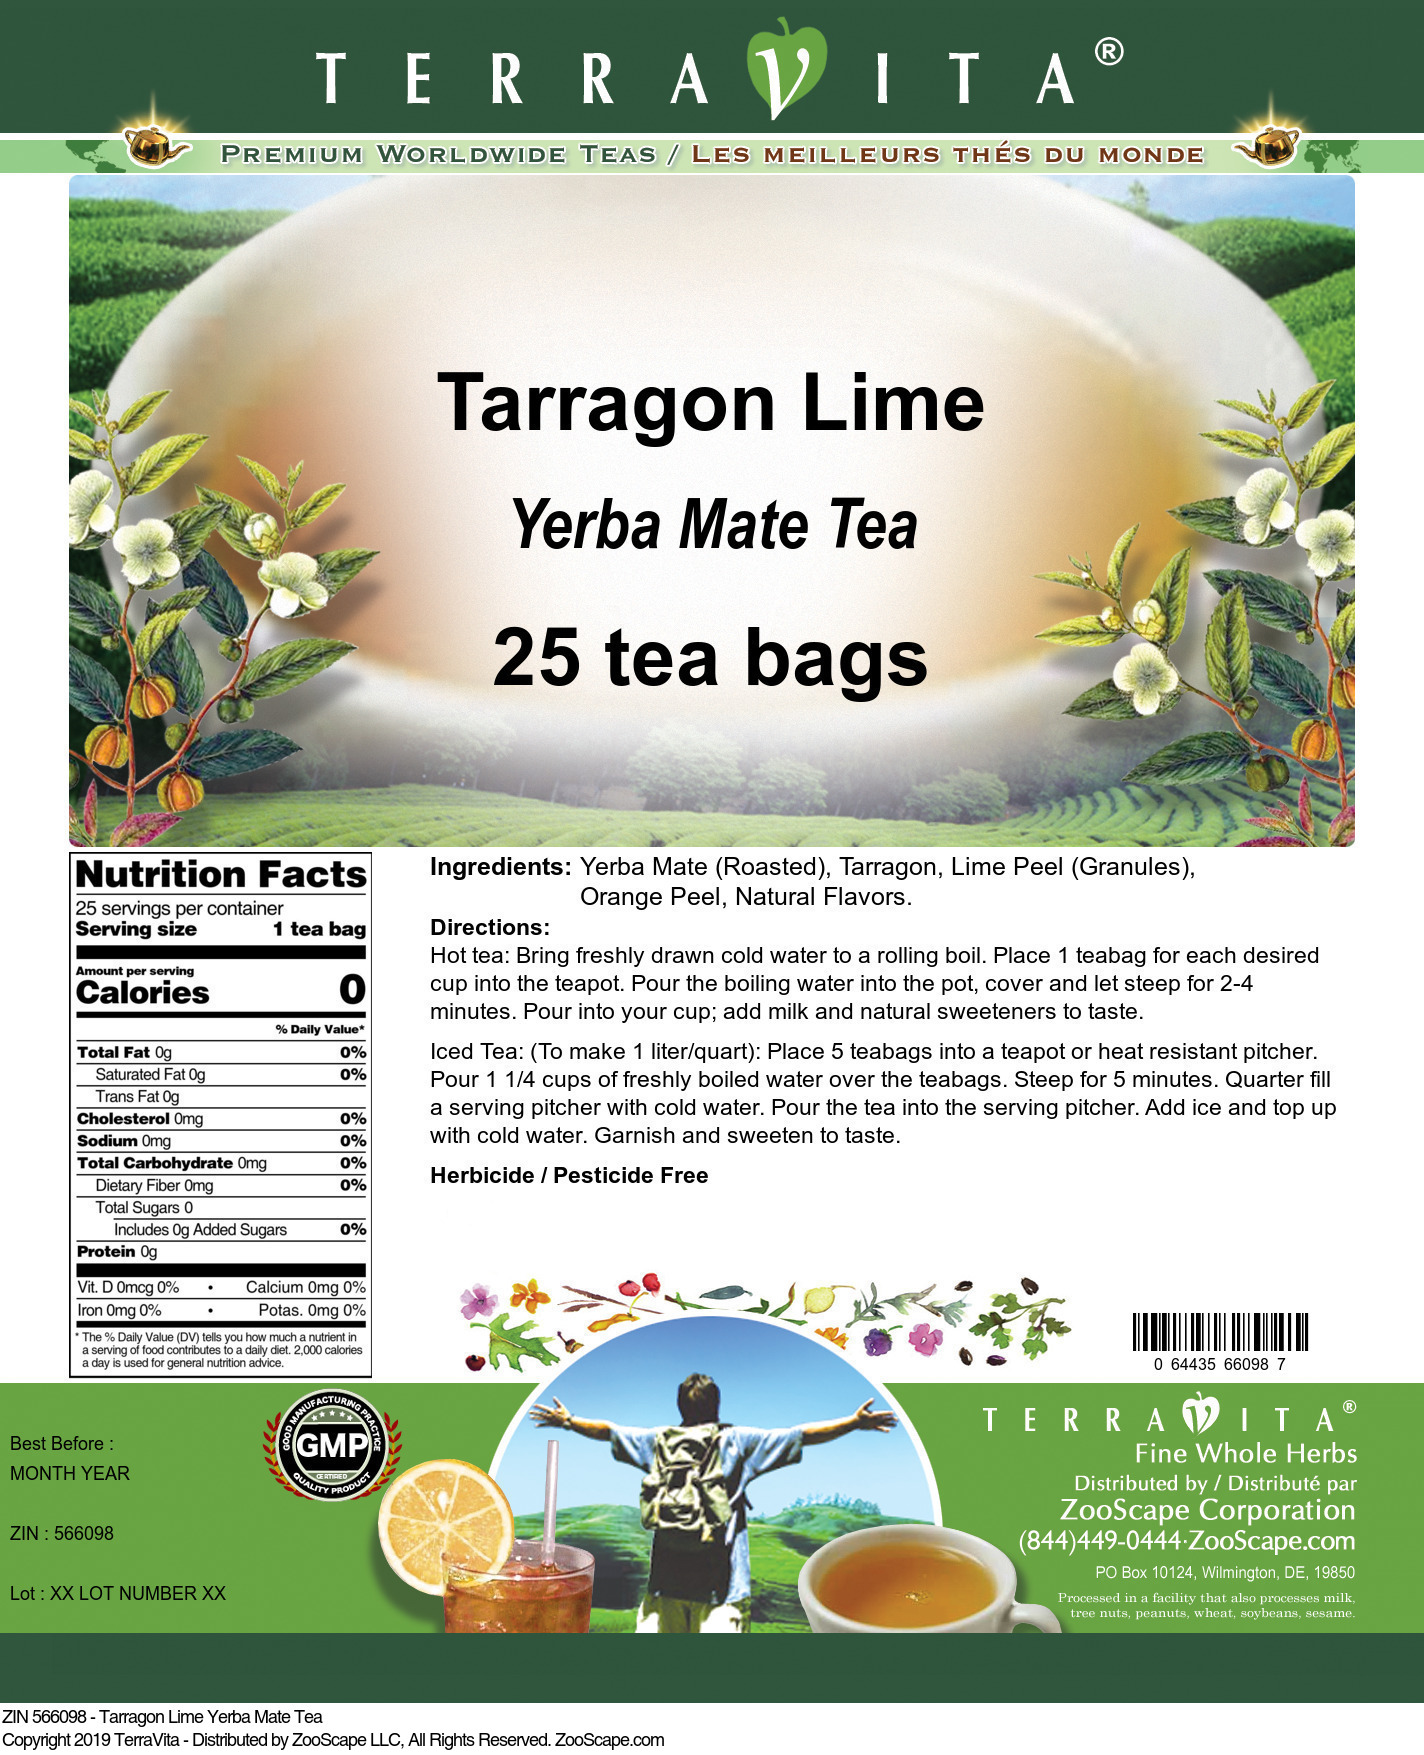 Tarragon Lime Yerba Mate Tea - Label